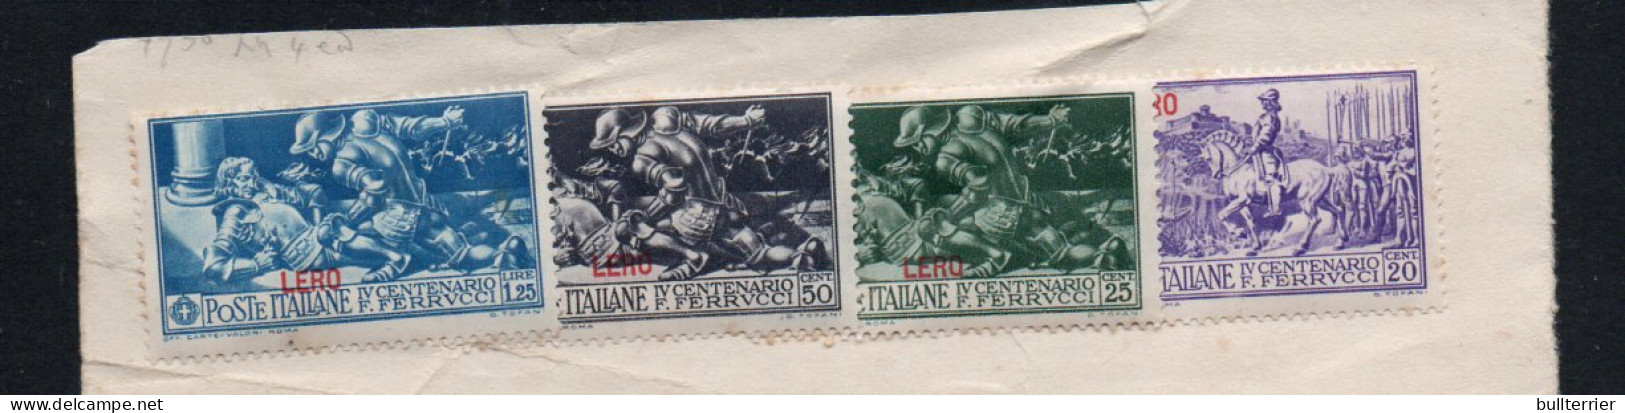 AEGEAN ISLANDS  /  LERO   -1930 FERRUCCI 20C. 25C  50C AND 1L25 MINT HINGED  SG CAT £23 - Ägäis (Nisiro)